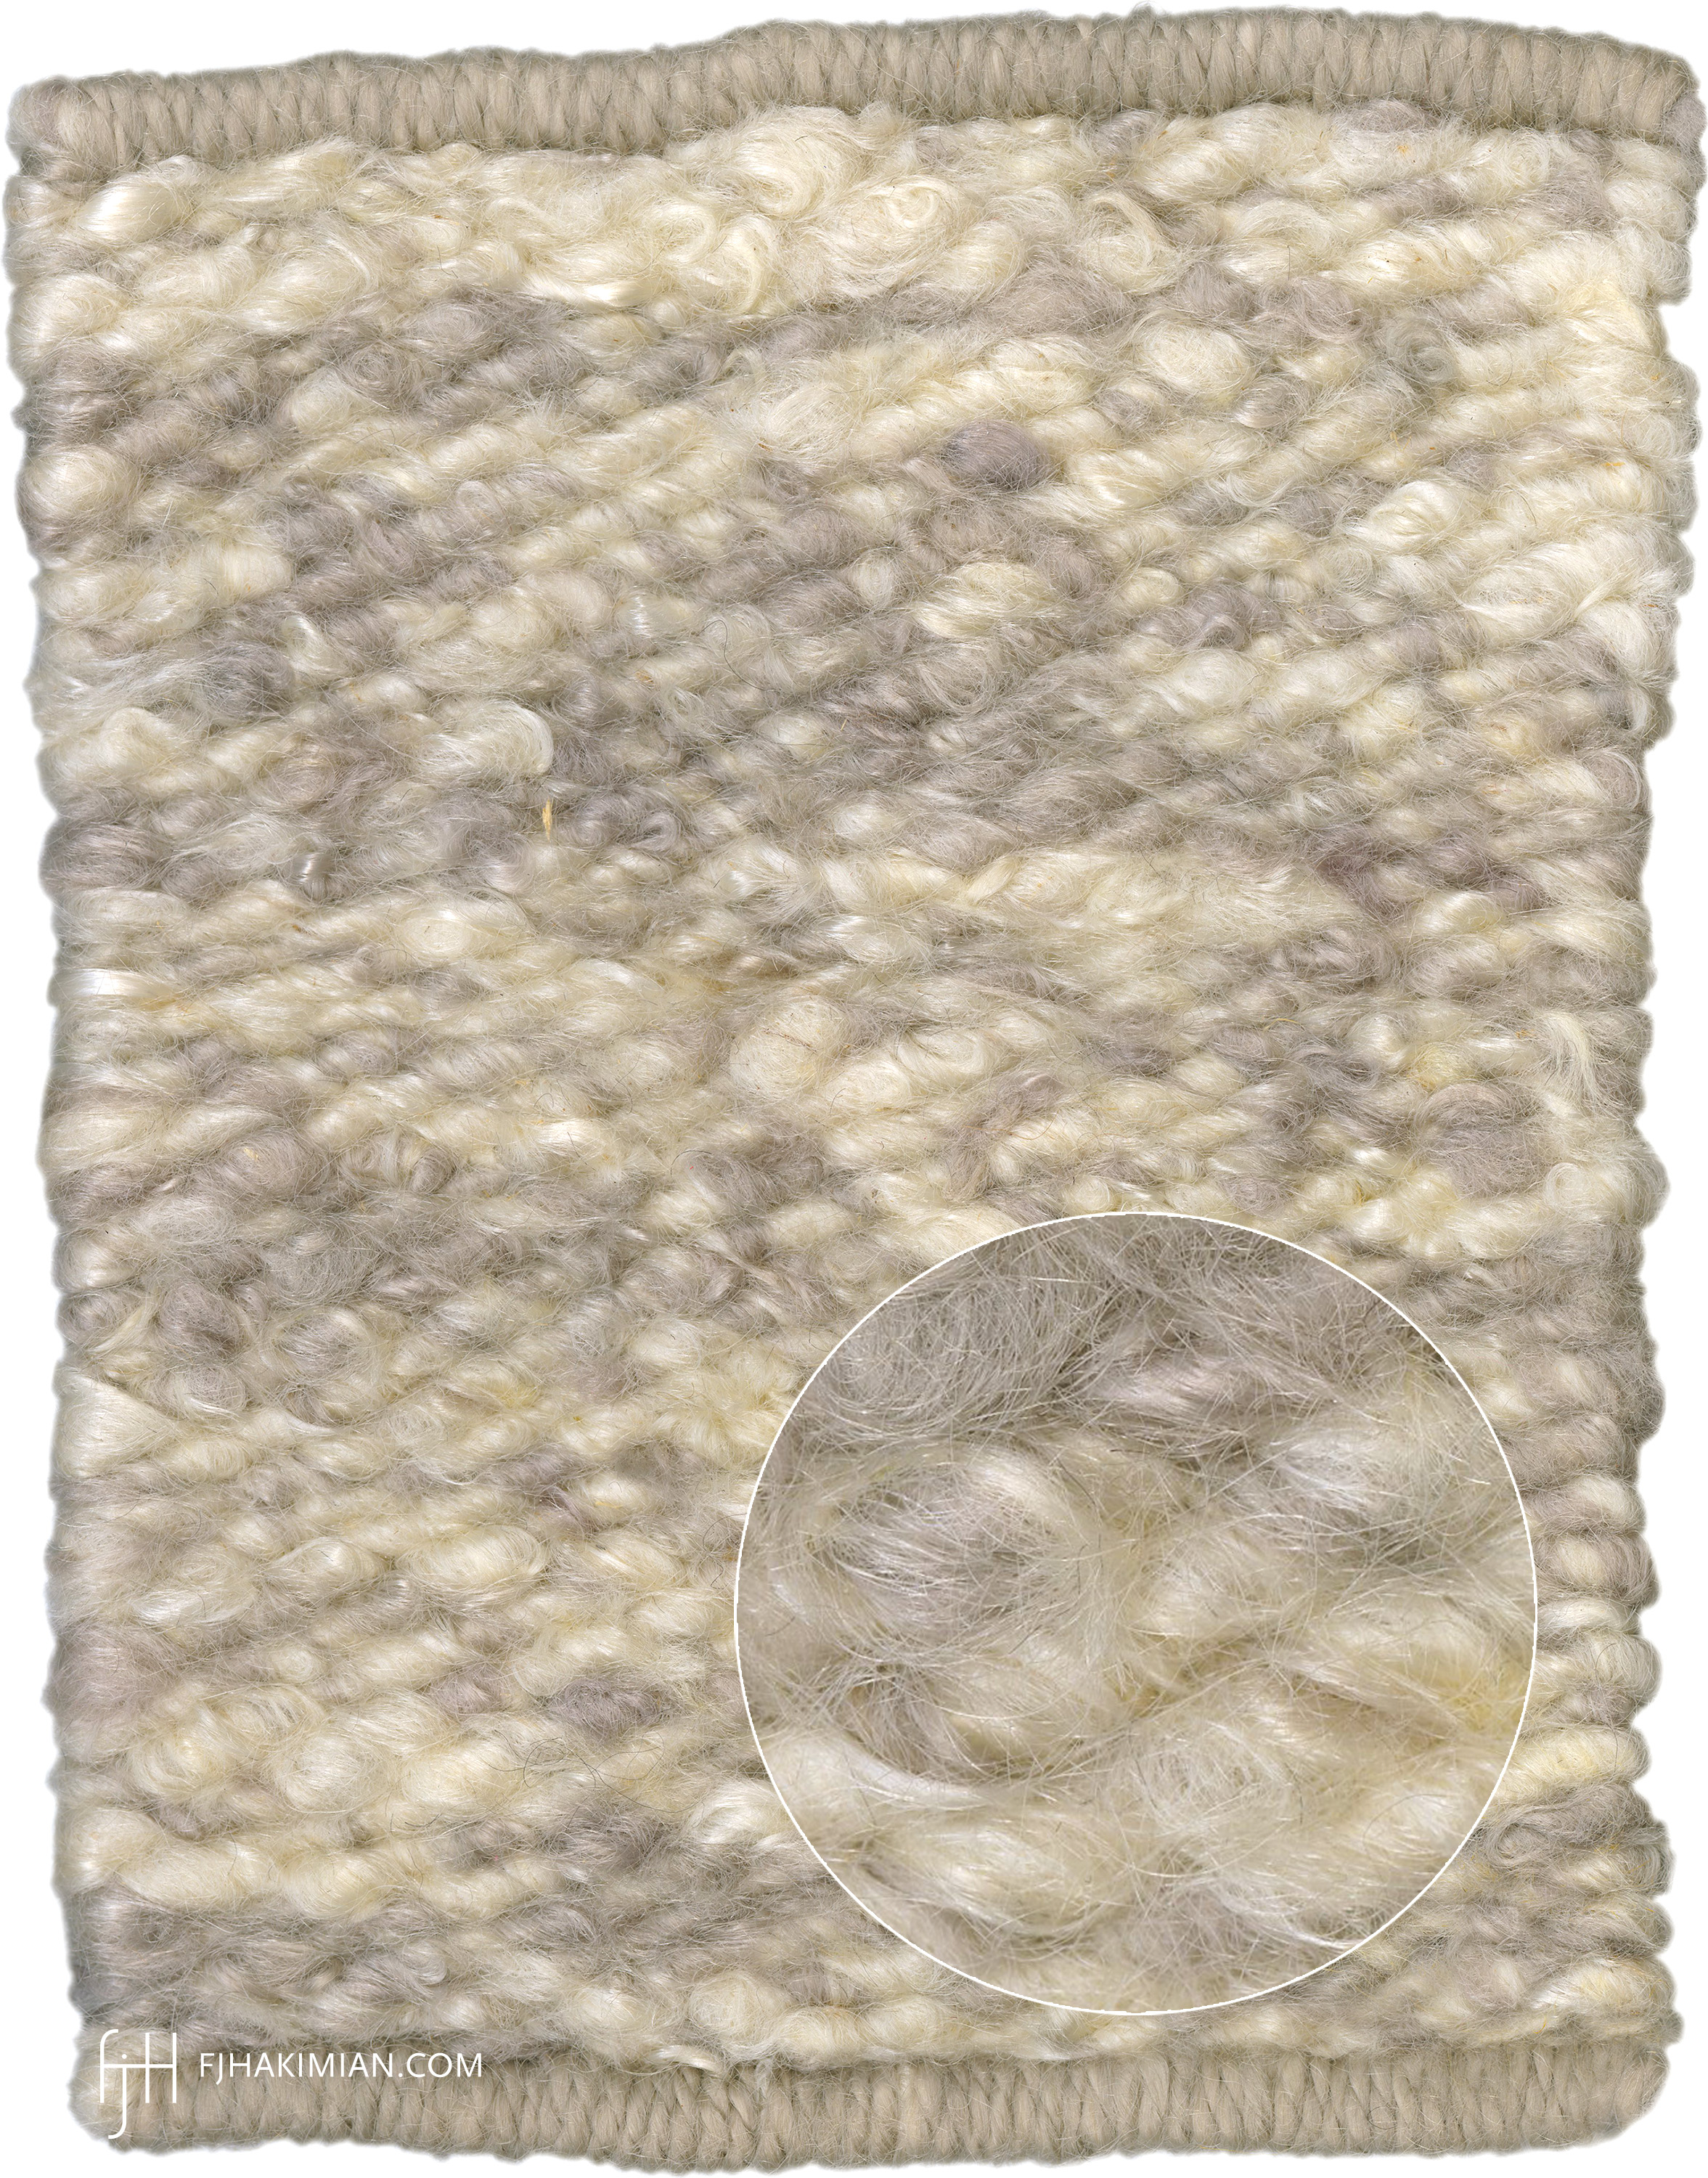 77805 KL-Marbled Dove Gray Custom Carpet | FJ Hakimian Carpet Gallery, New York 